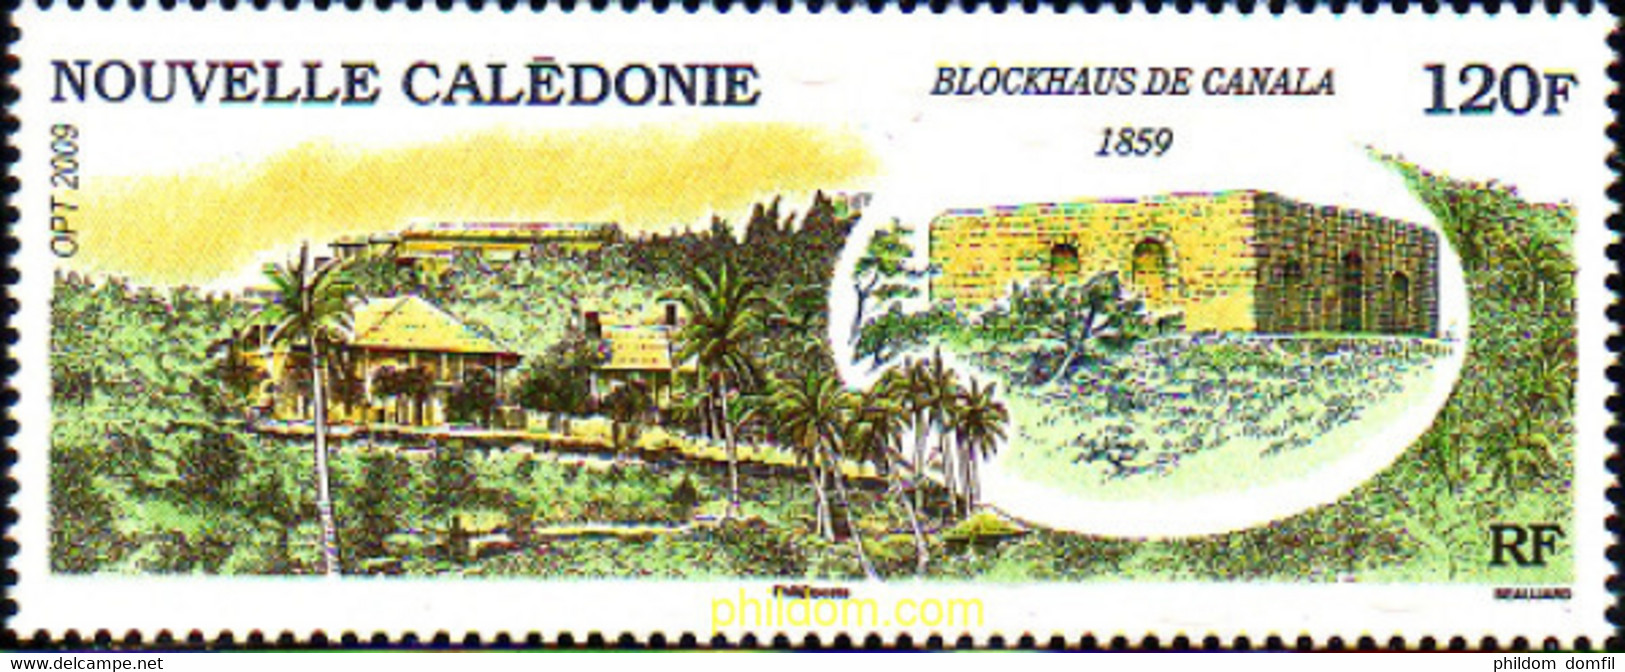 236426 MNH NUEVA CALEDONIA 2009 BLOCKHAUS DE CANALA - Used Stamps